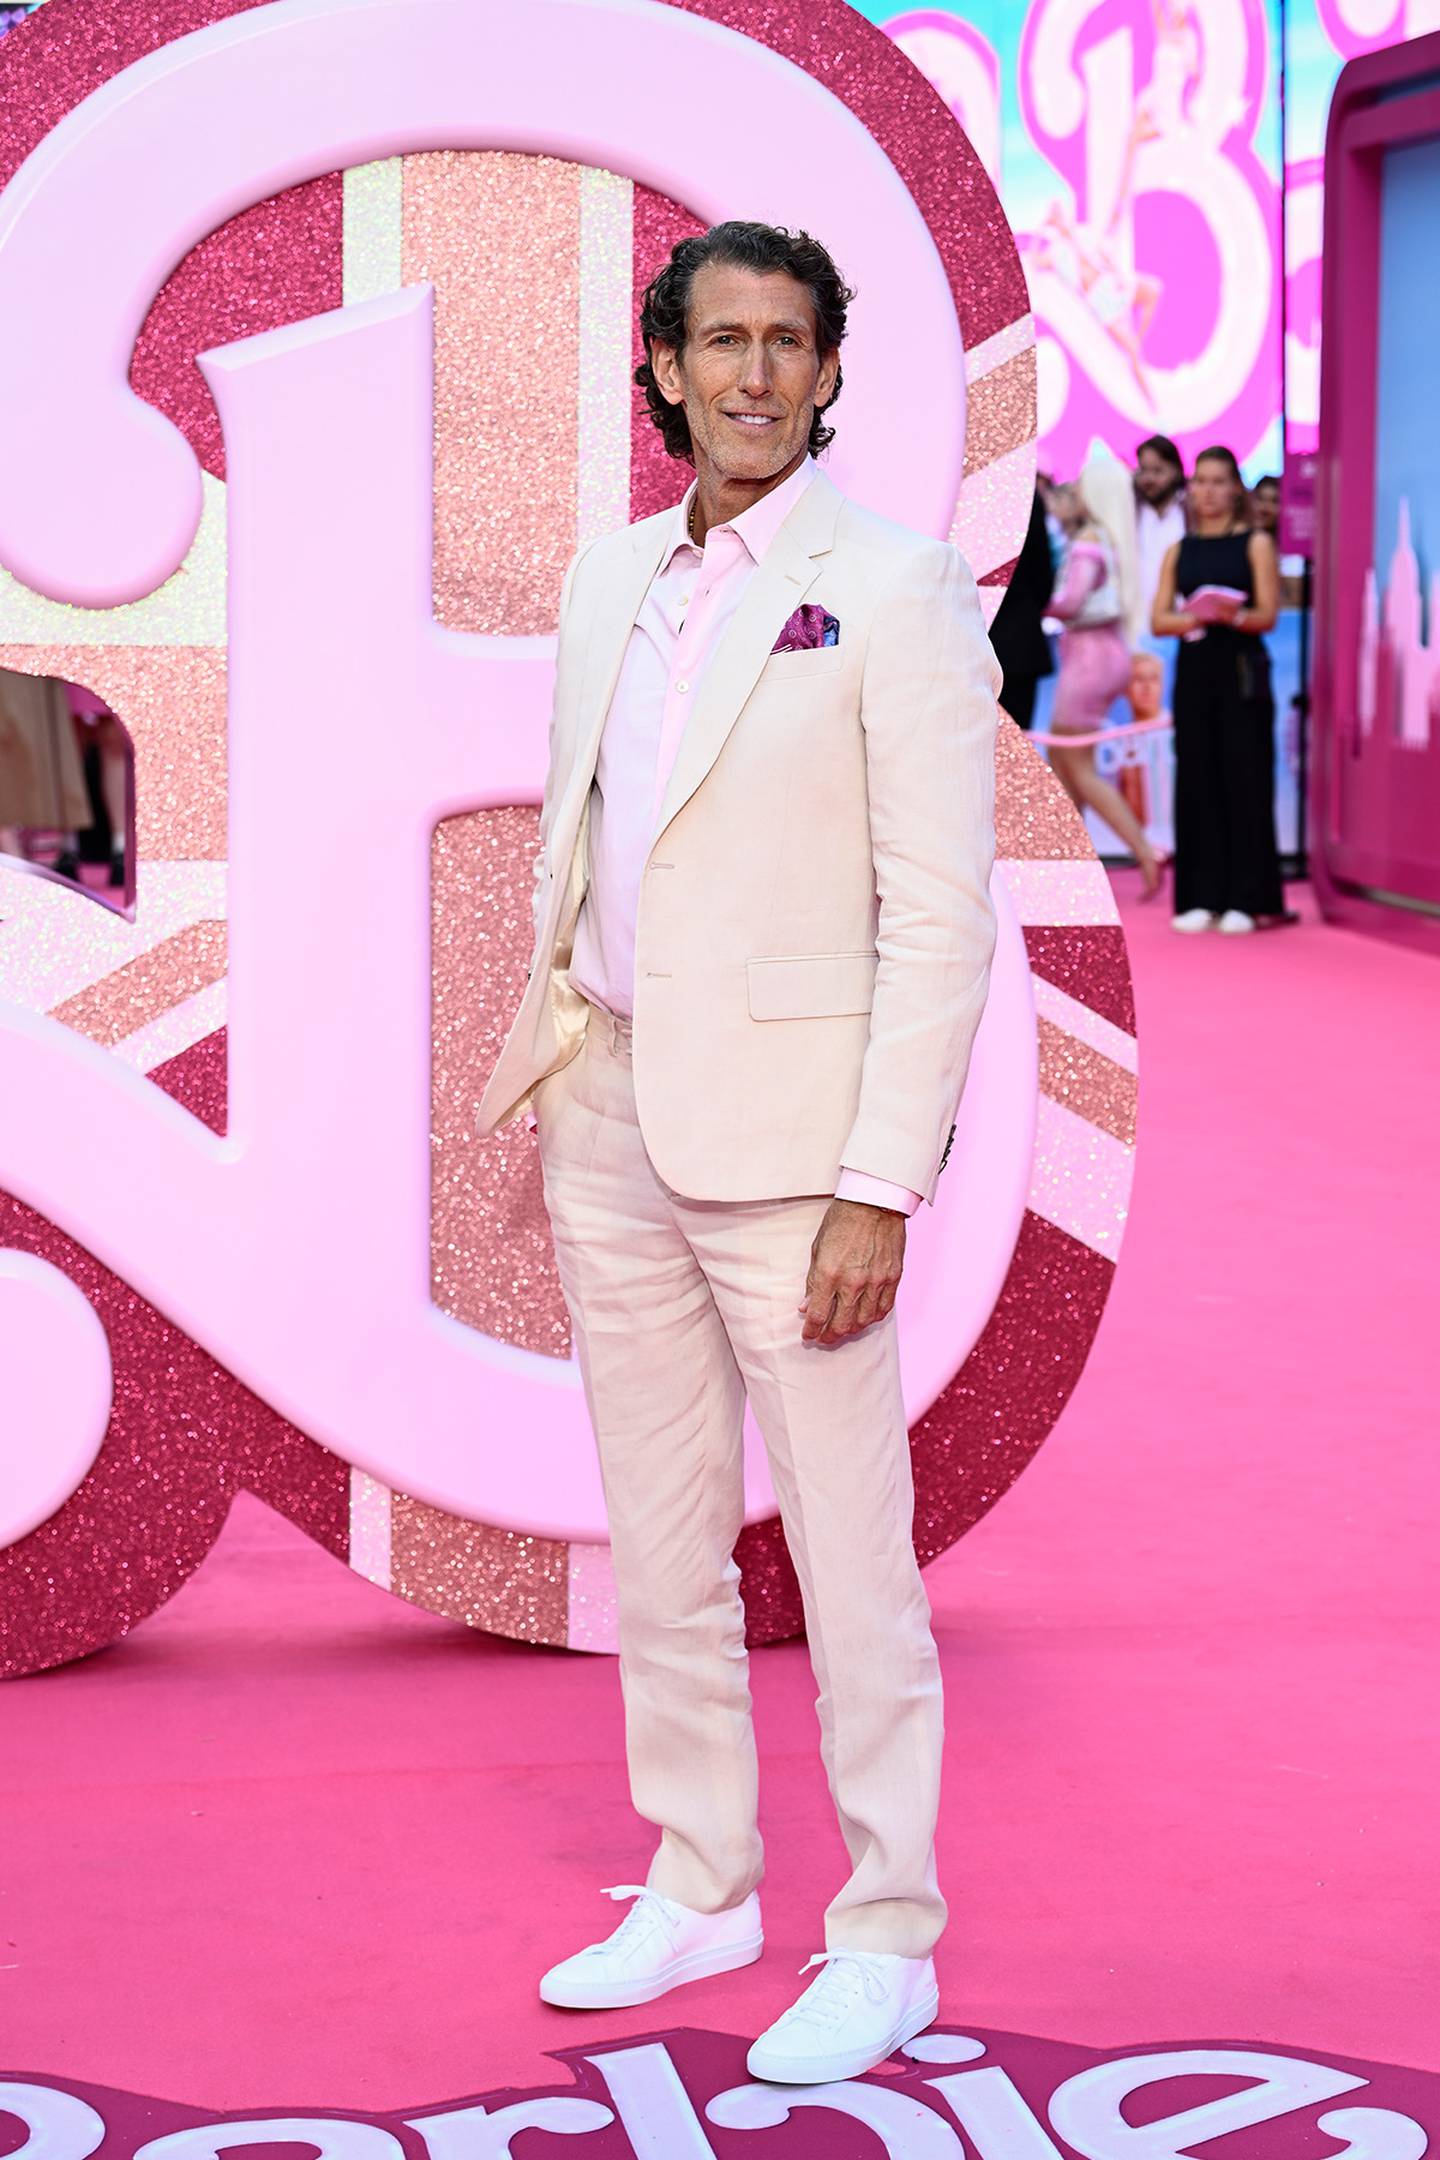 Richard Dickson attends the "Barbie" European Premiere